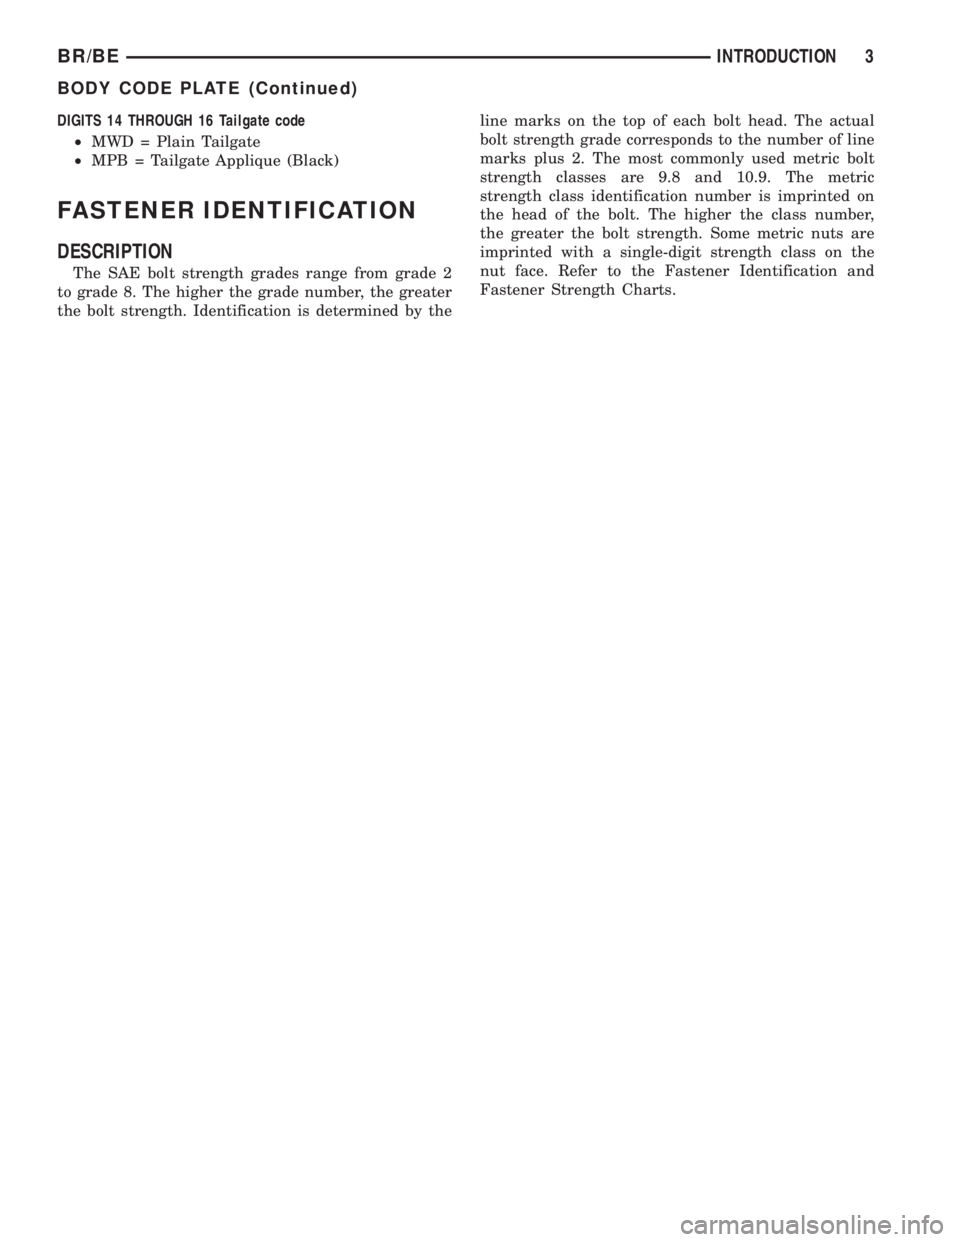 DODGE RAM 2001  Service Repair Manual DIGITS 14 THROUGH 16 Tailgate code
²MWD = Plain Tailgate
²MPB = Tailgate Applique (Black)
FASTENER IDENTIFICATION
DESCRIPTION
The SAE bolt strength grades range from grade 2
to grade 8. The higher t